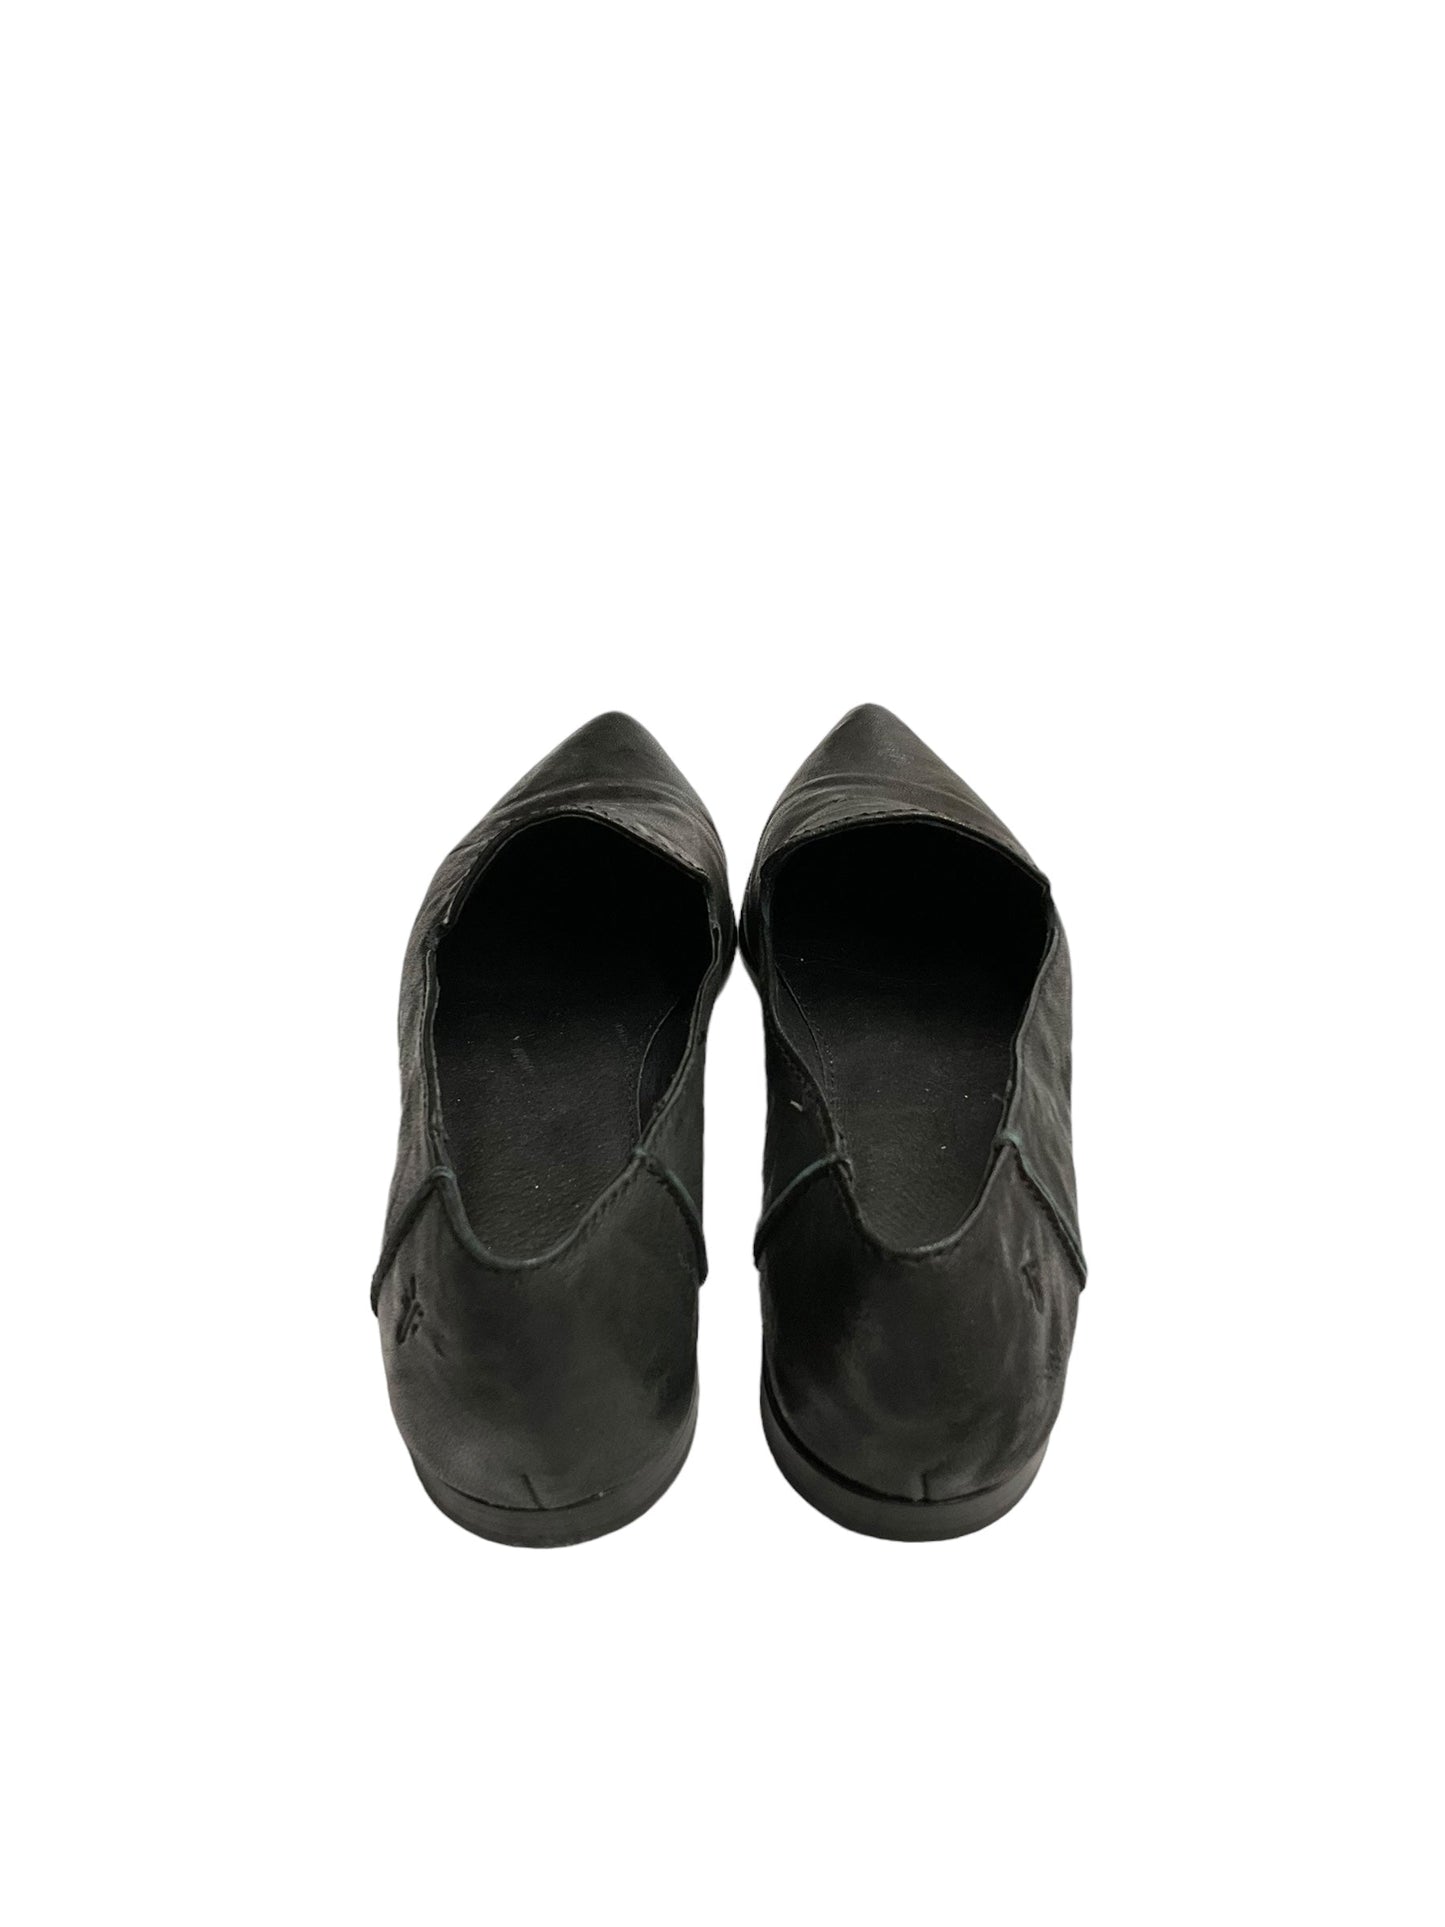 Black Shoes Flats Frye, Size 6